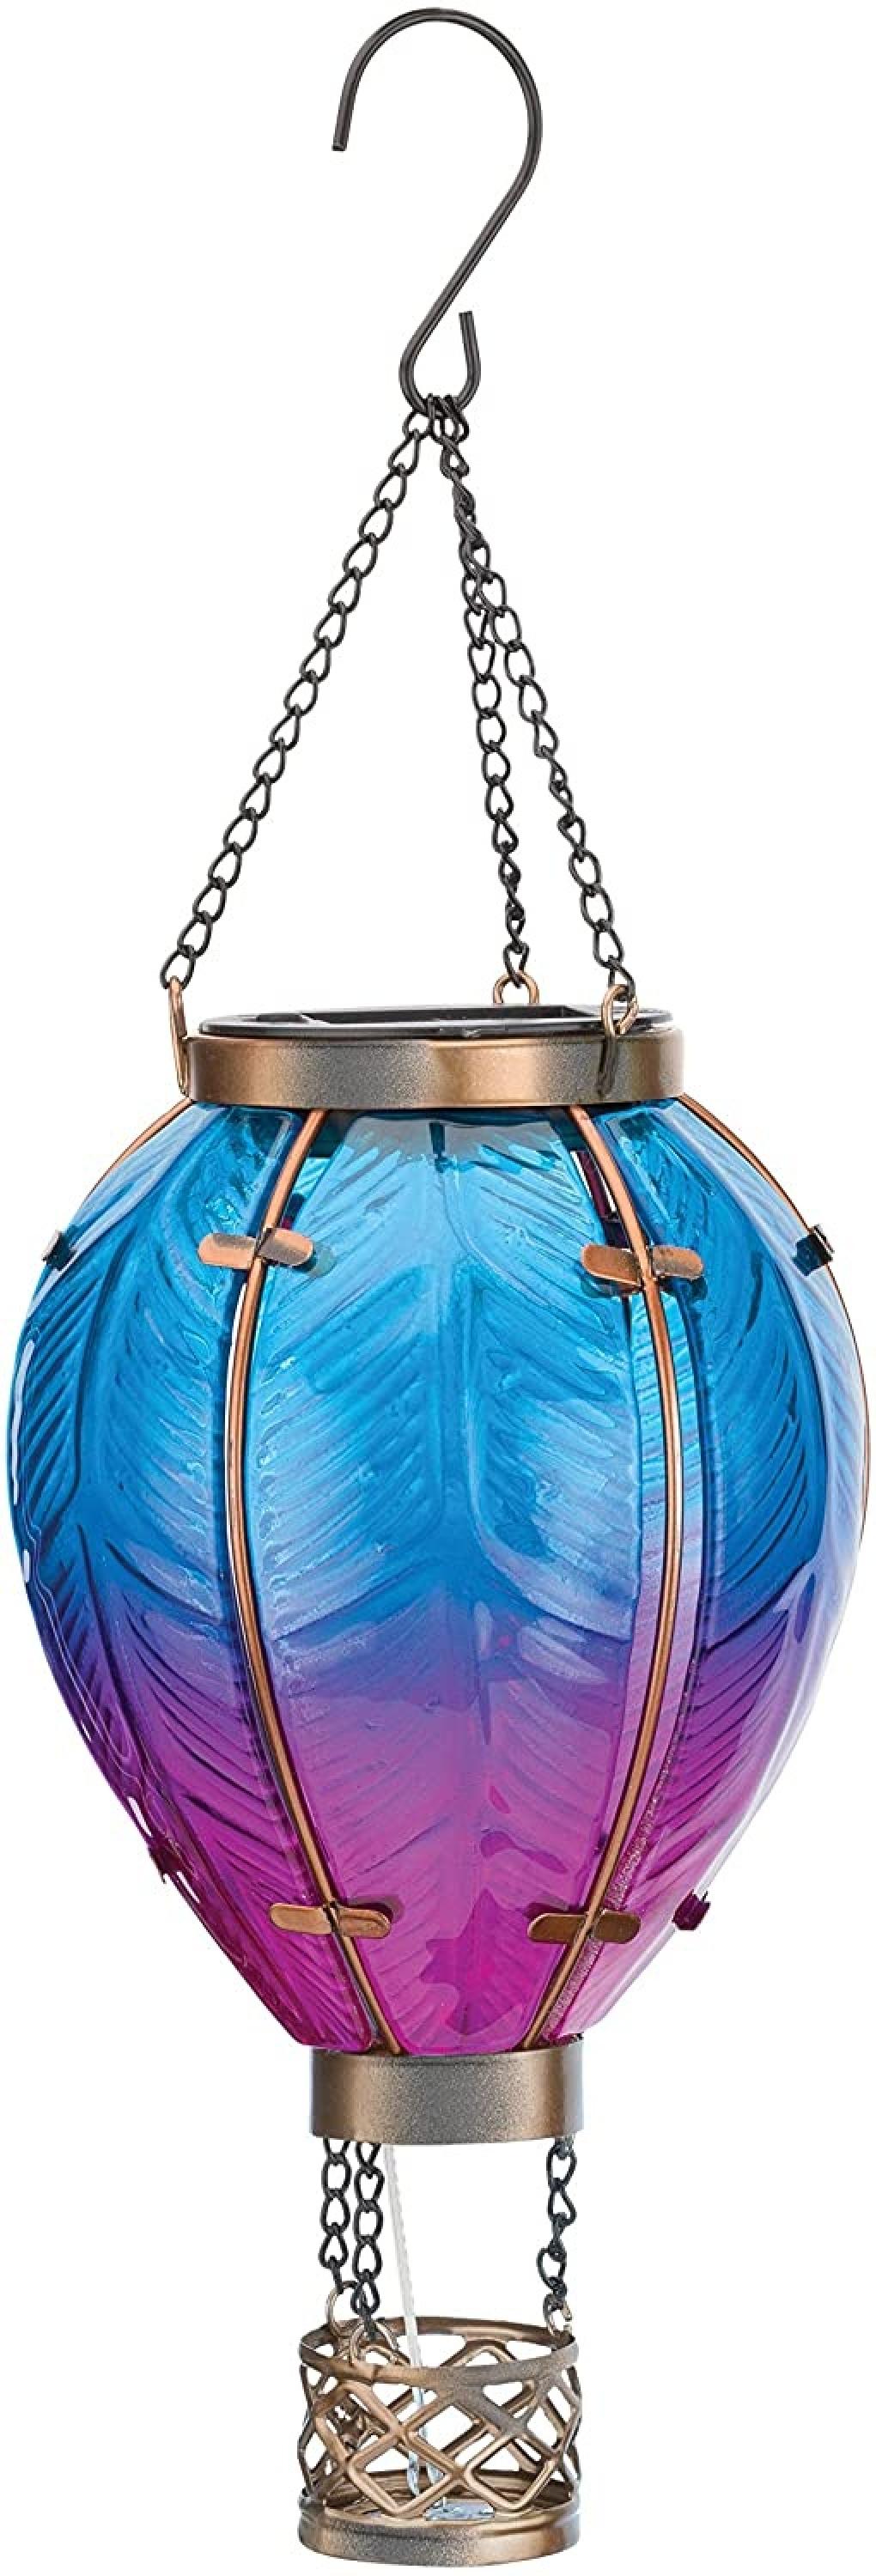 Regal Art & Gift Small Blue Hot Air Balloon